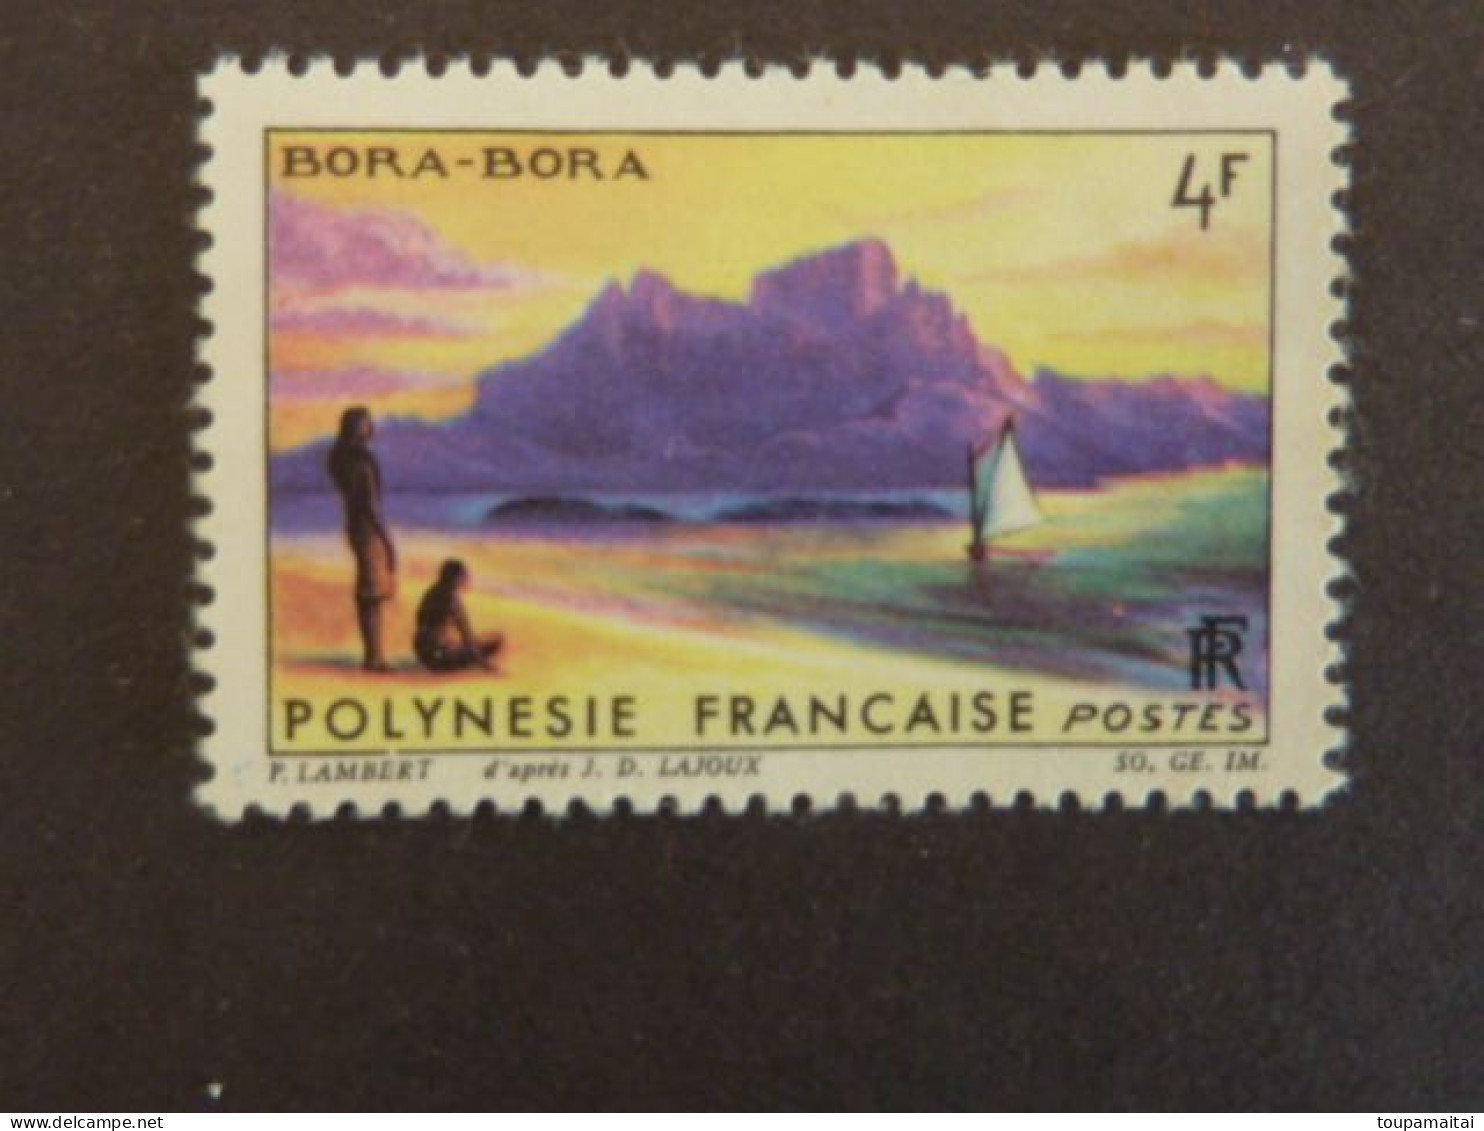 POLYNESIE FRANCAISE, Année 1964, YT N° 31 MNH** BoraBora - Nuevos